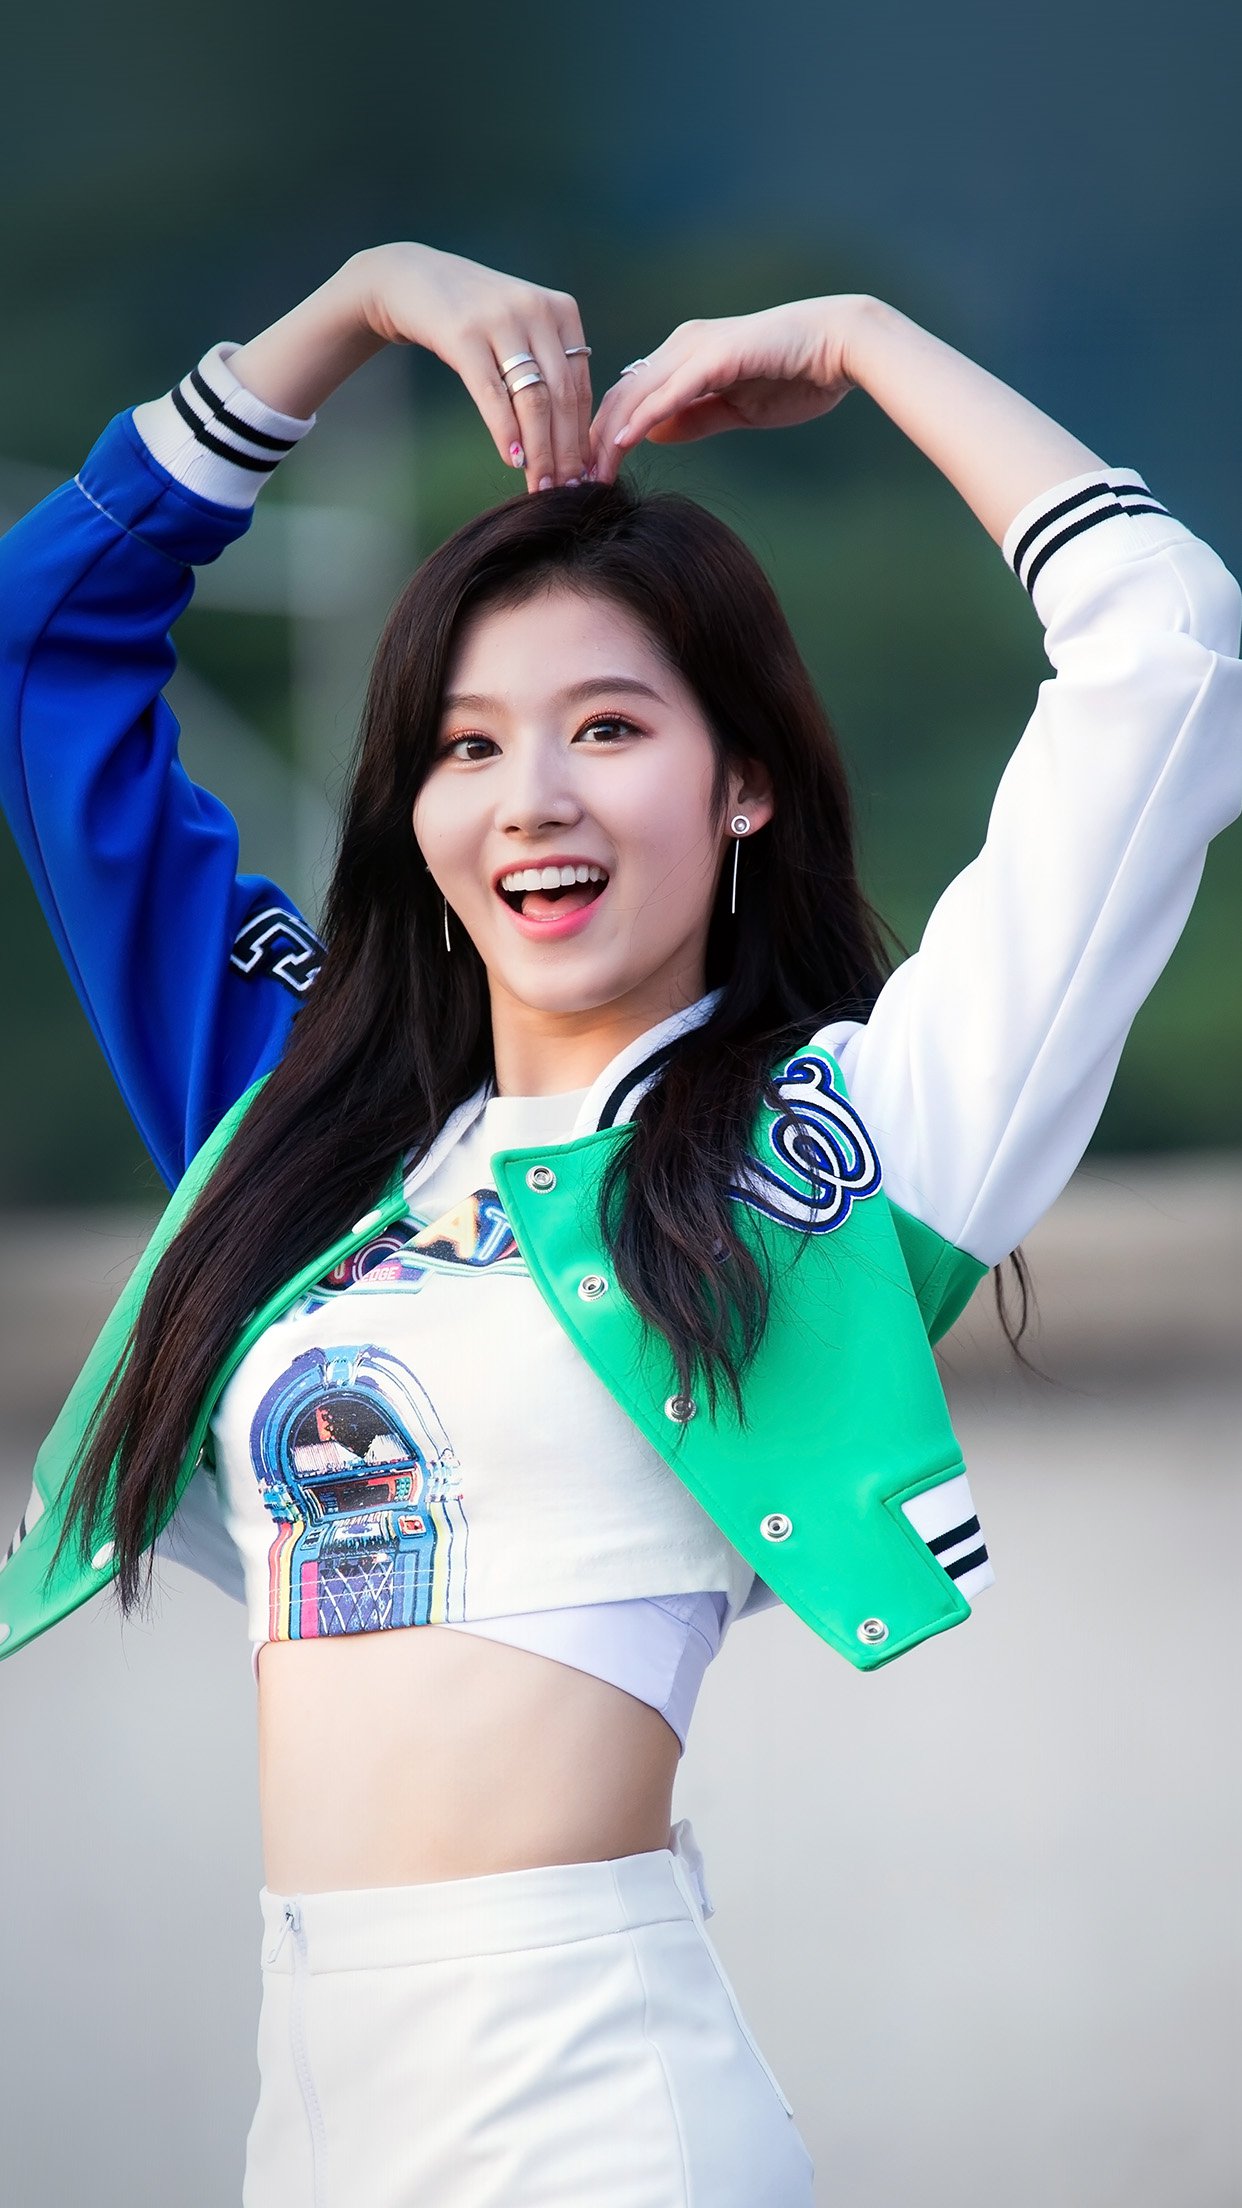 girl wallpaper hd,cheerleading uniform,cheerleading,arm,abdomen,uniform